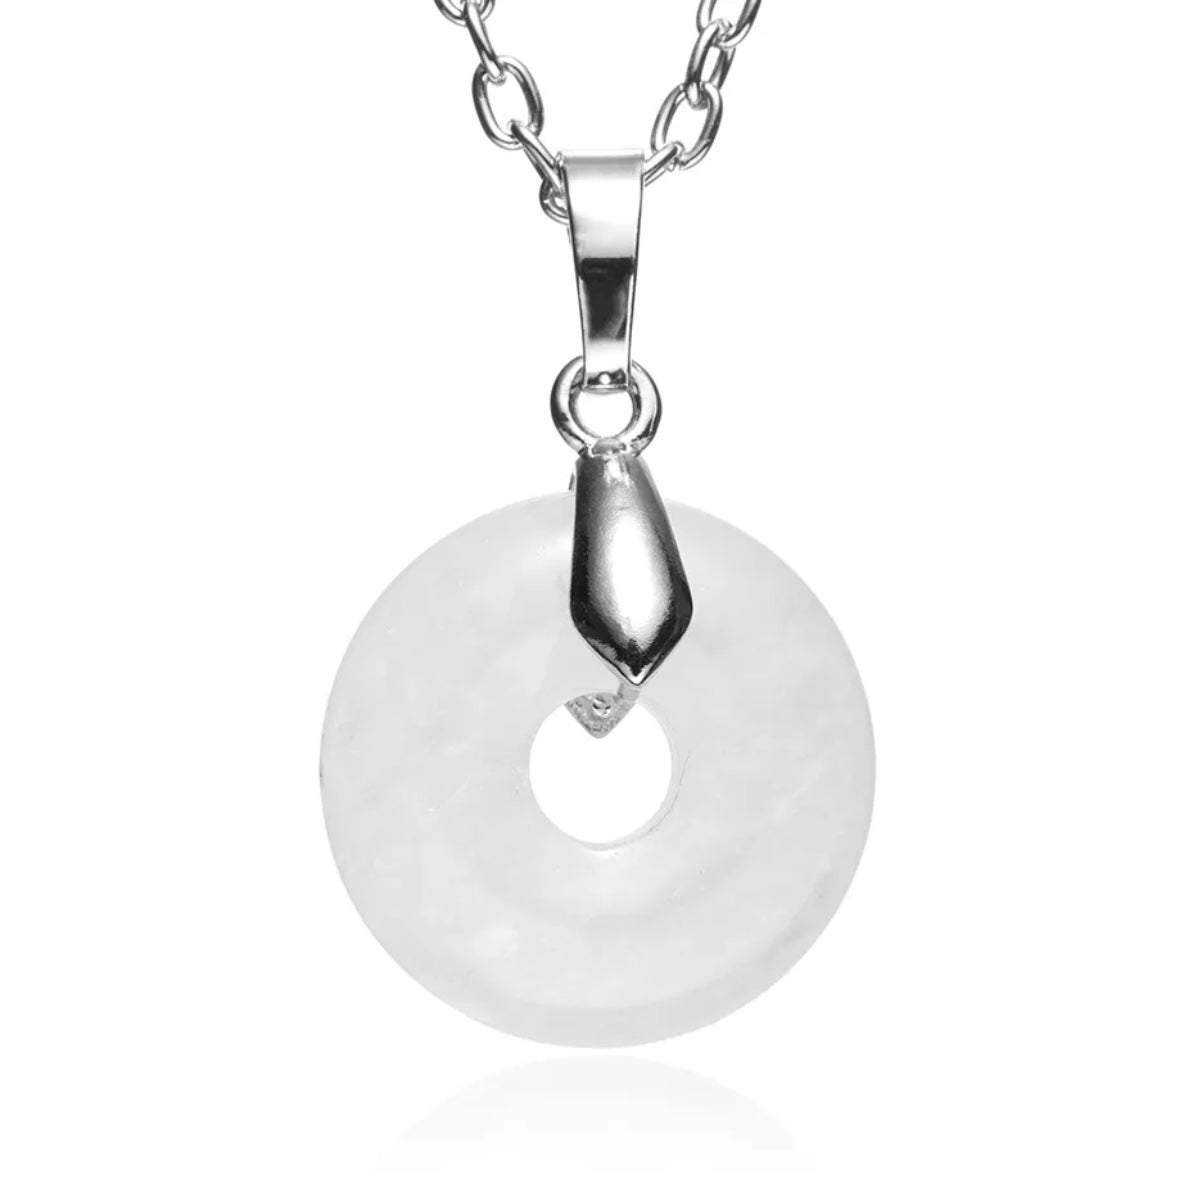 Clear quartz crystal Necklace